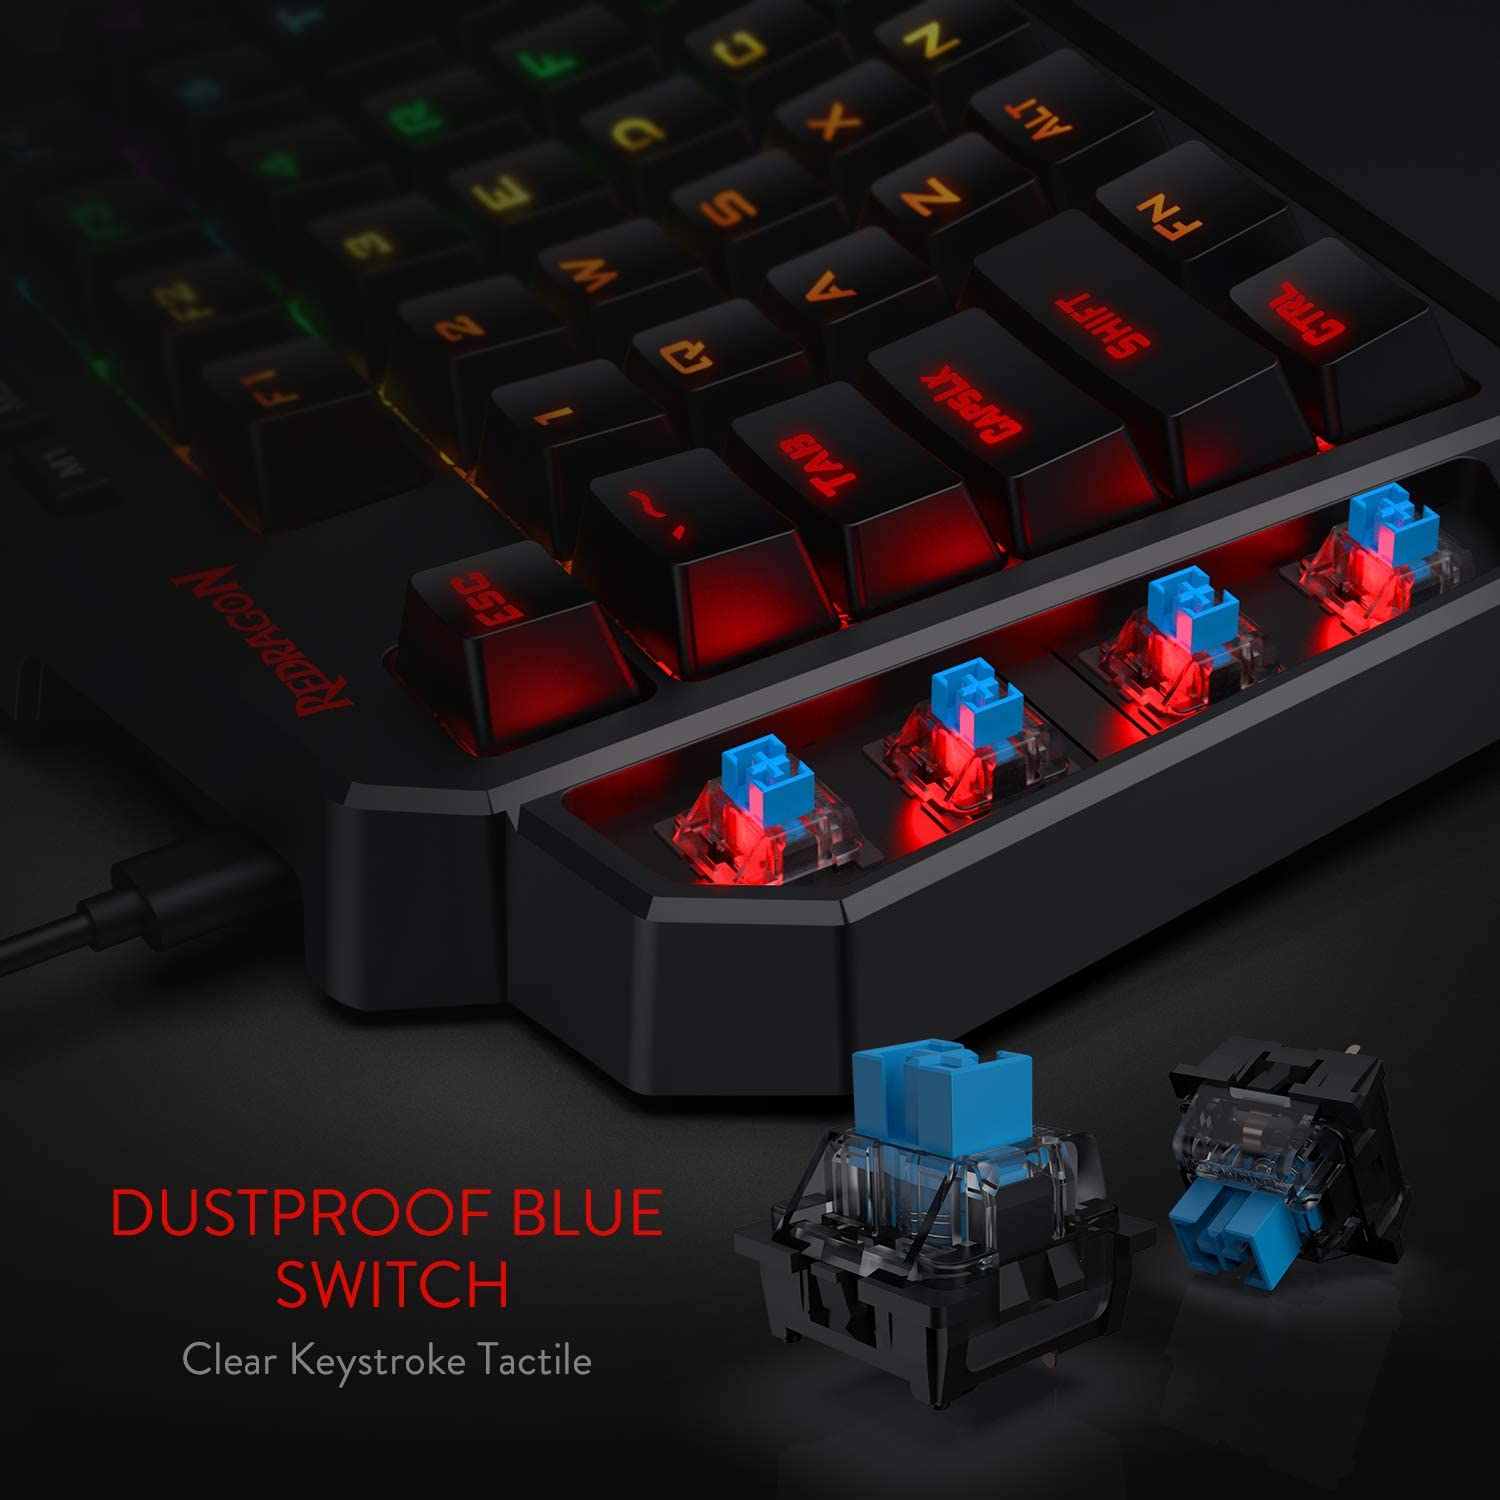 Red Dragon K585 DITI One-Handed RGB Mechanical Gaming Keyboard